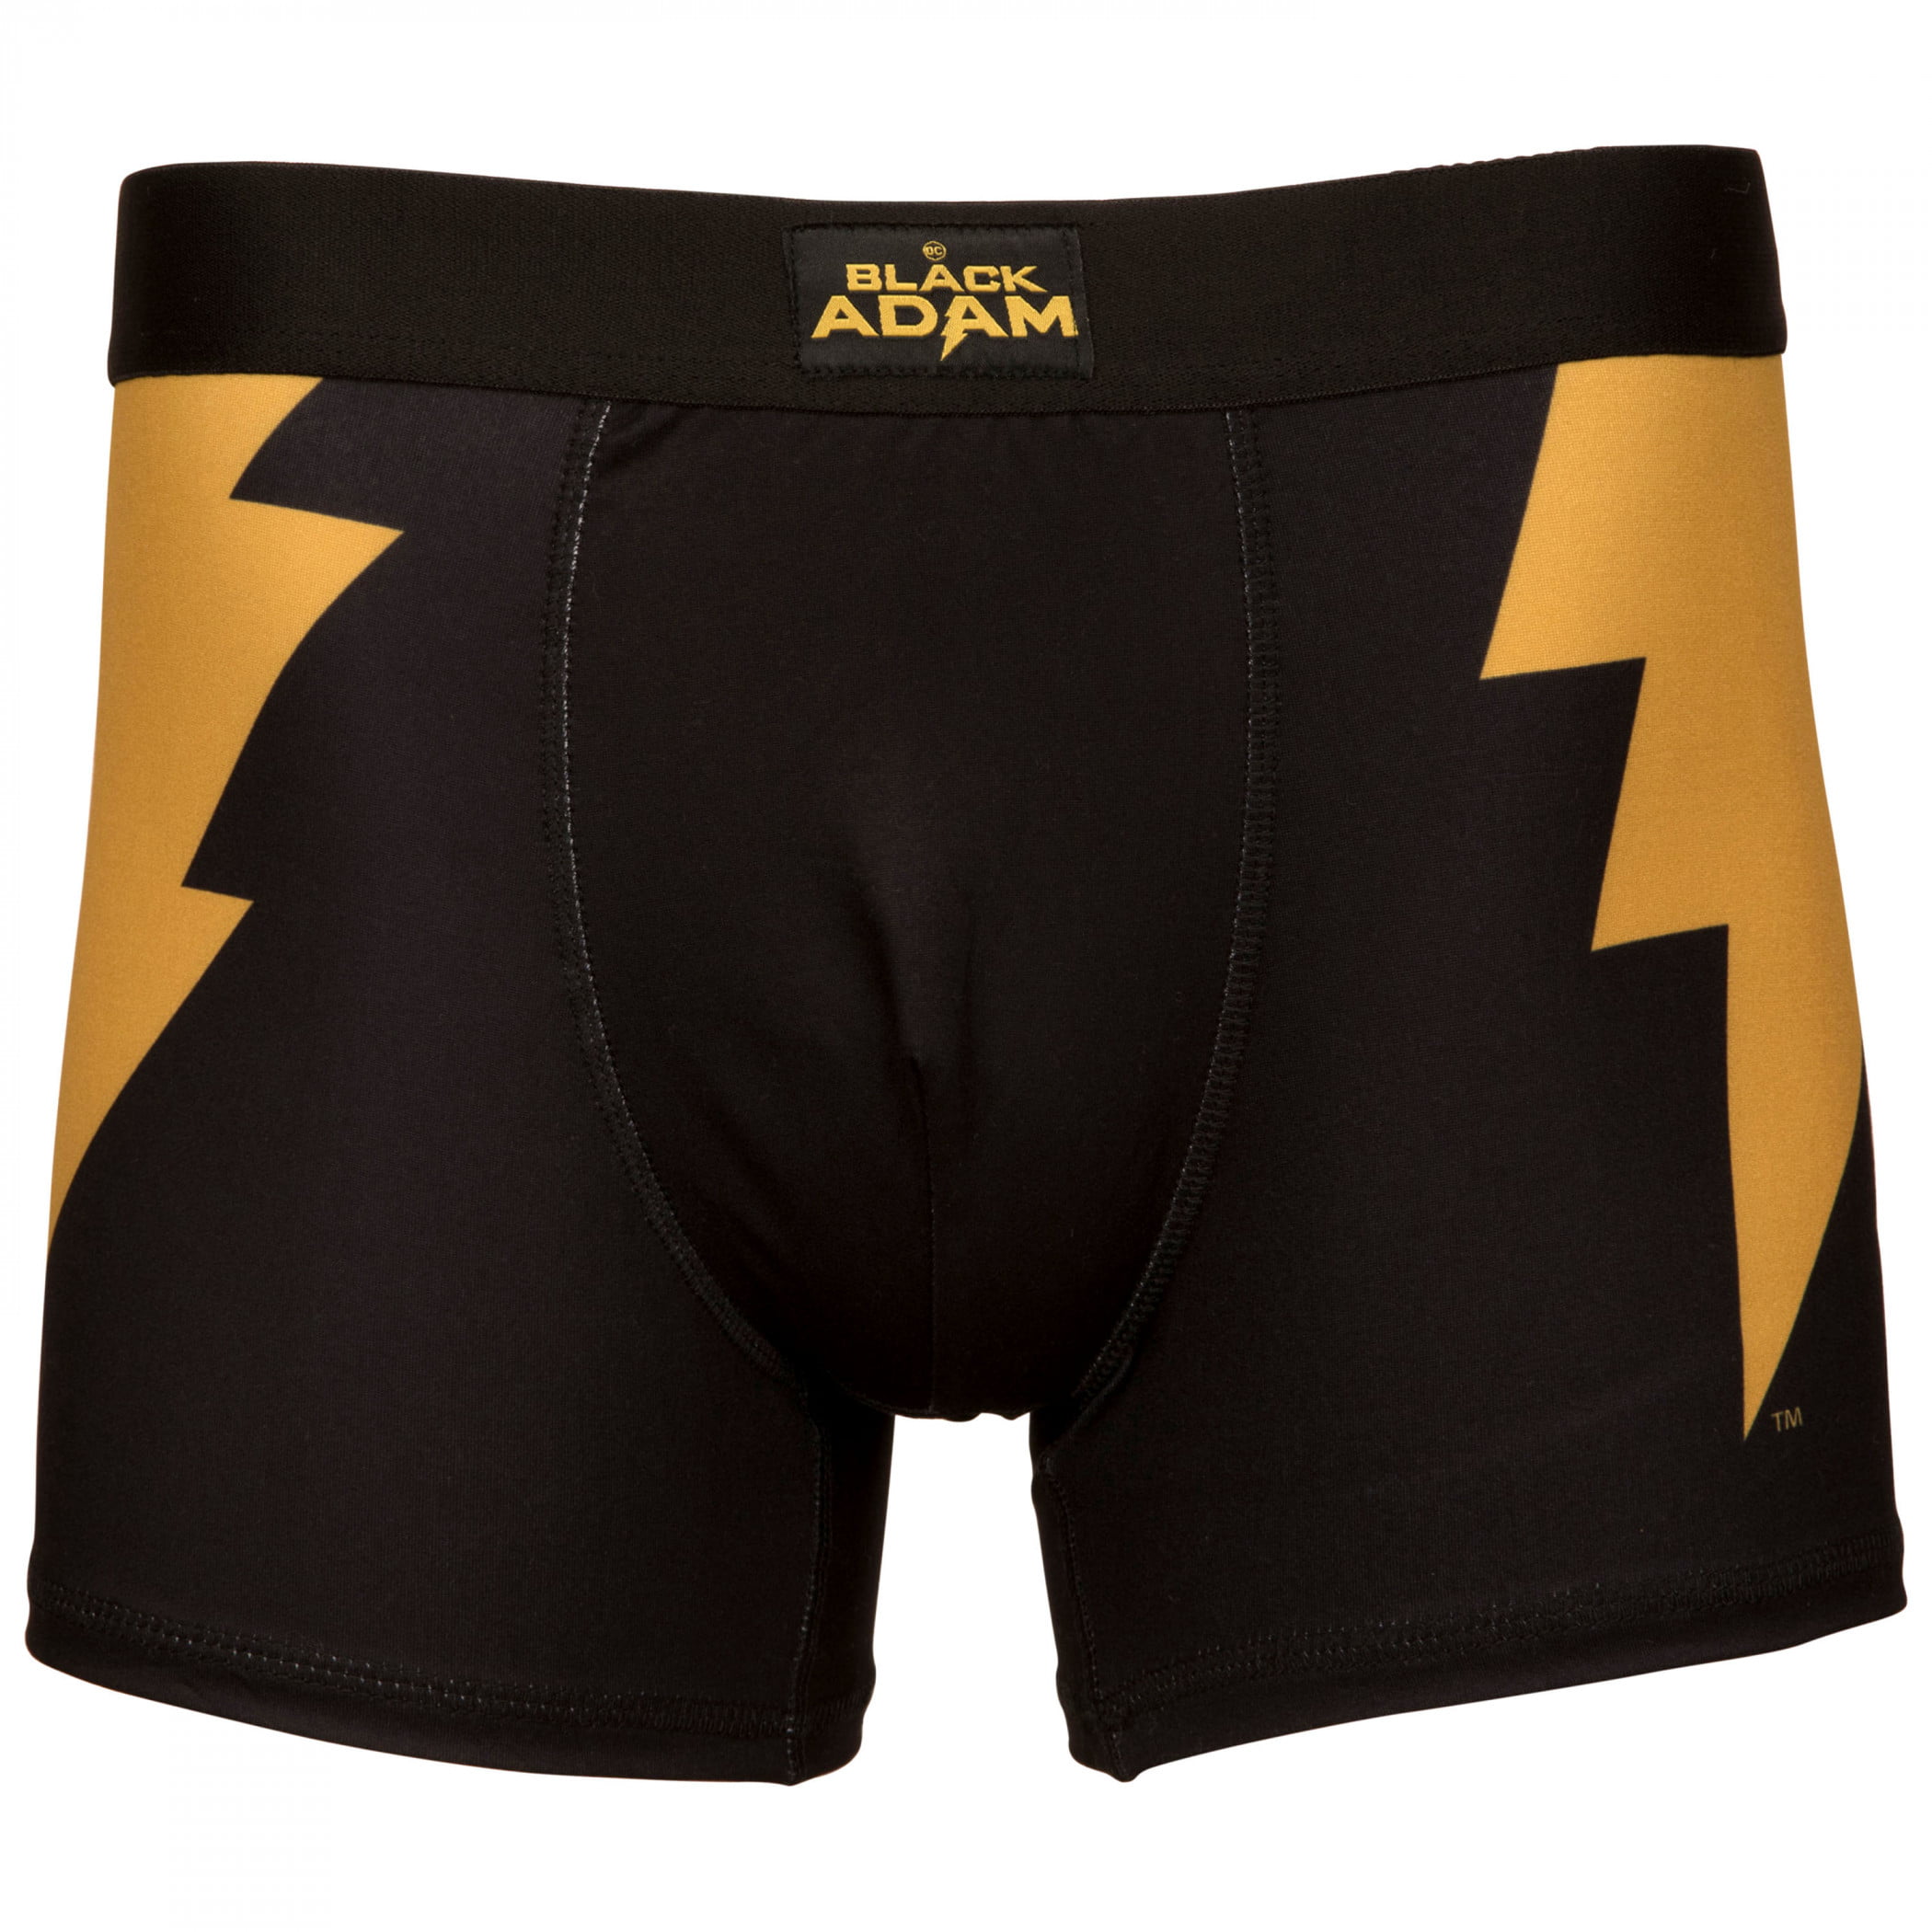 DC Comics Black Adam Logo Men's Underwear Boxer Briefs-XXLarge (44-46)